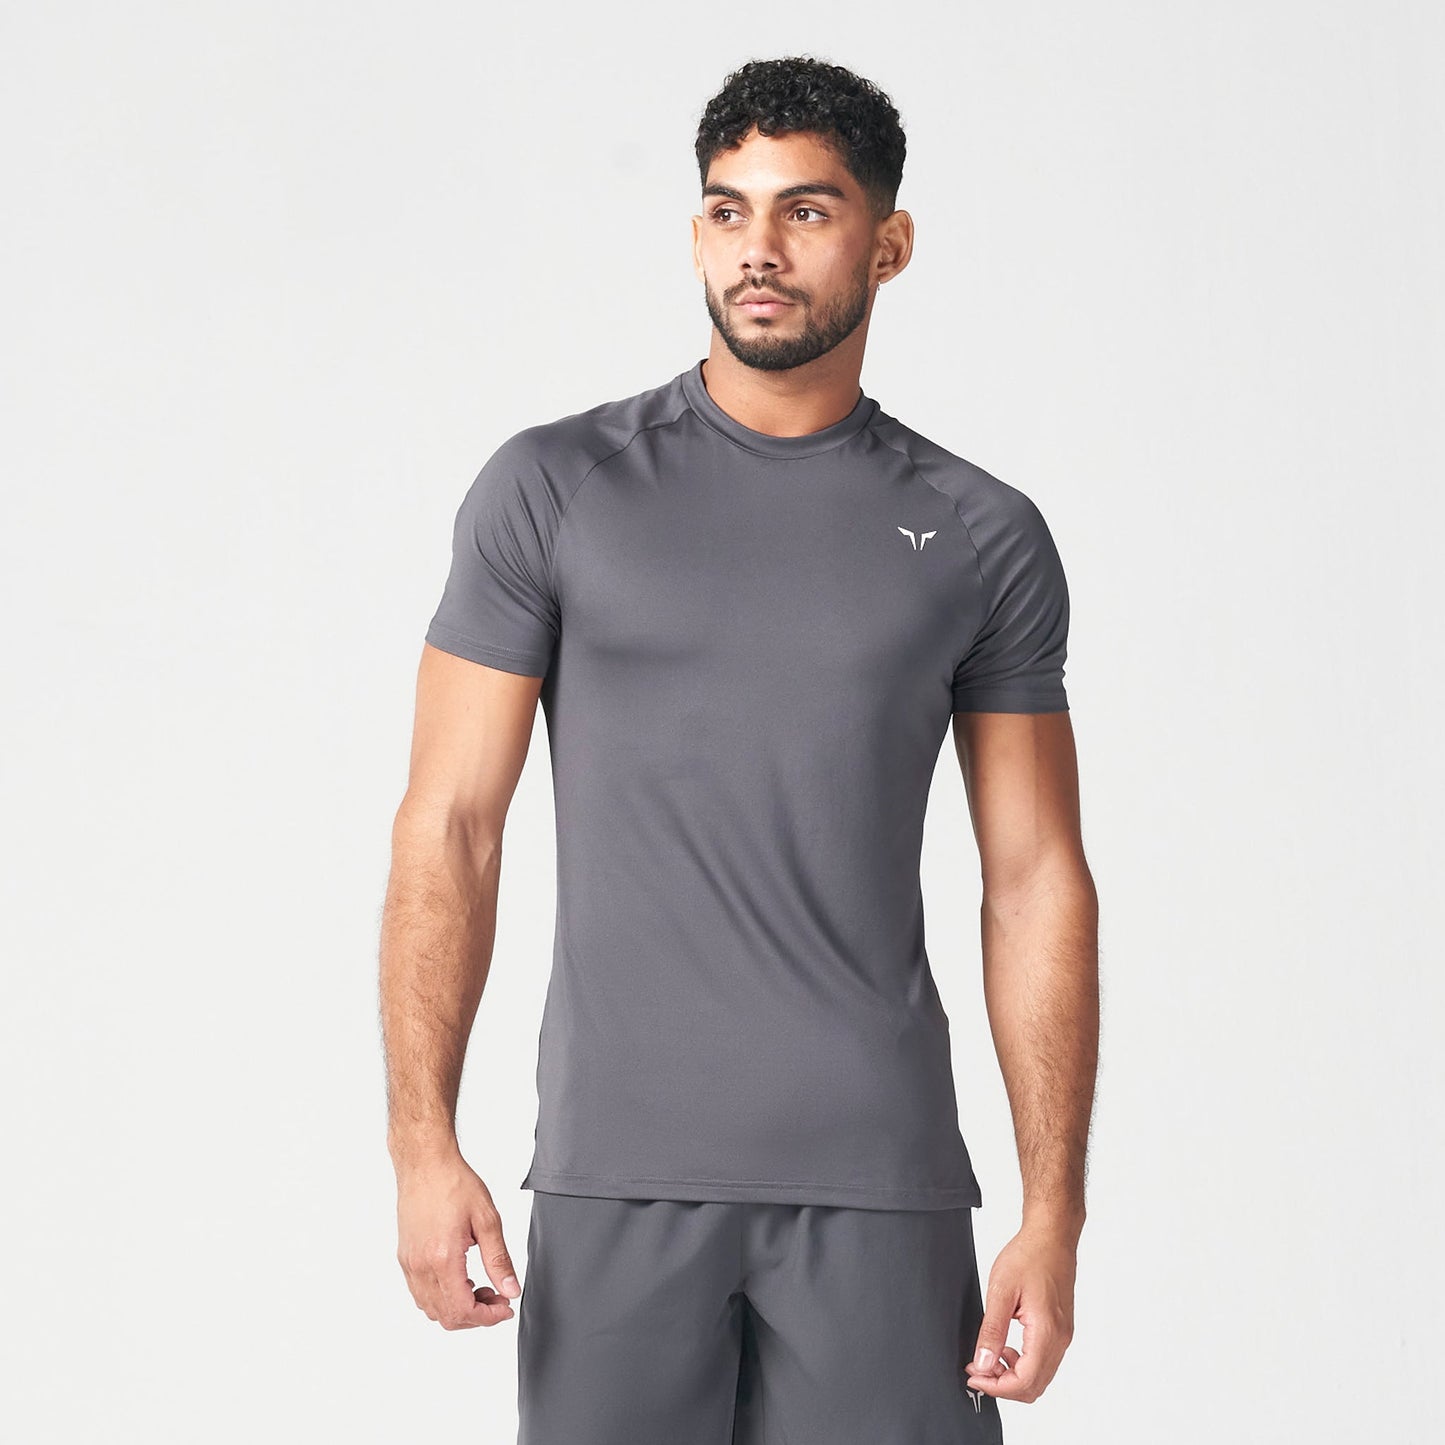 squatwolf-gym-wear-essential-tee-bundle-2-workout-shirts-for-men